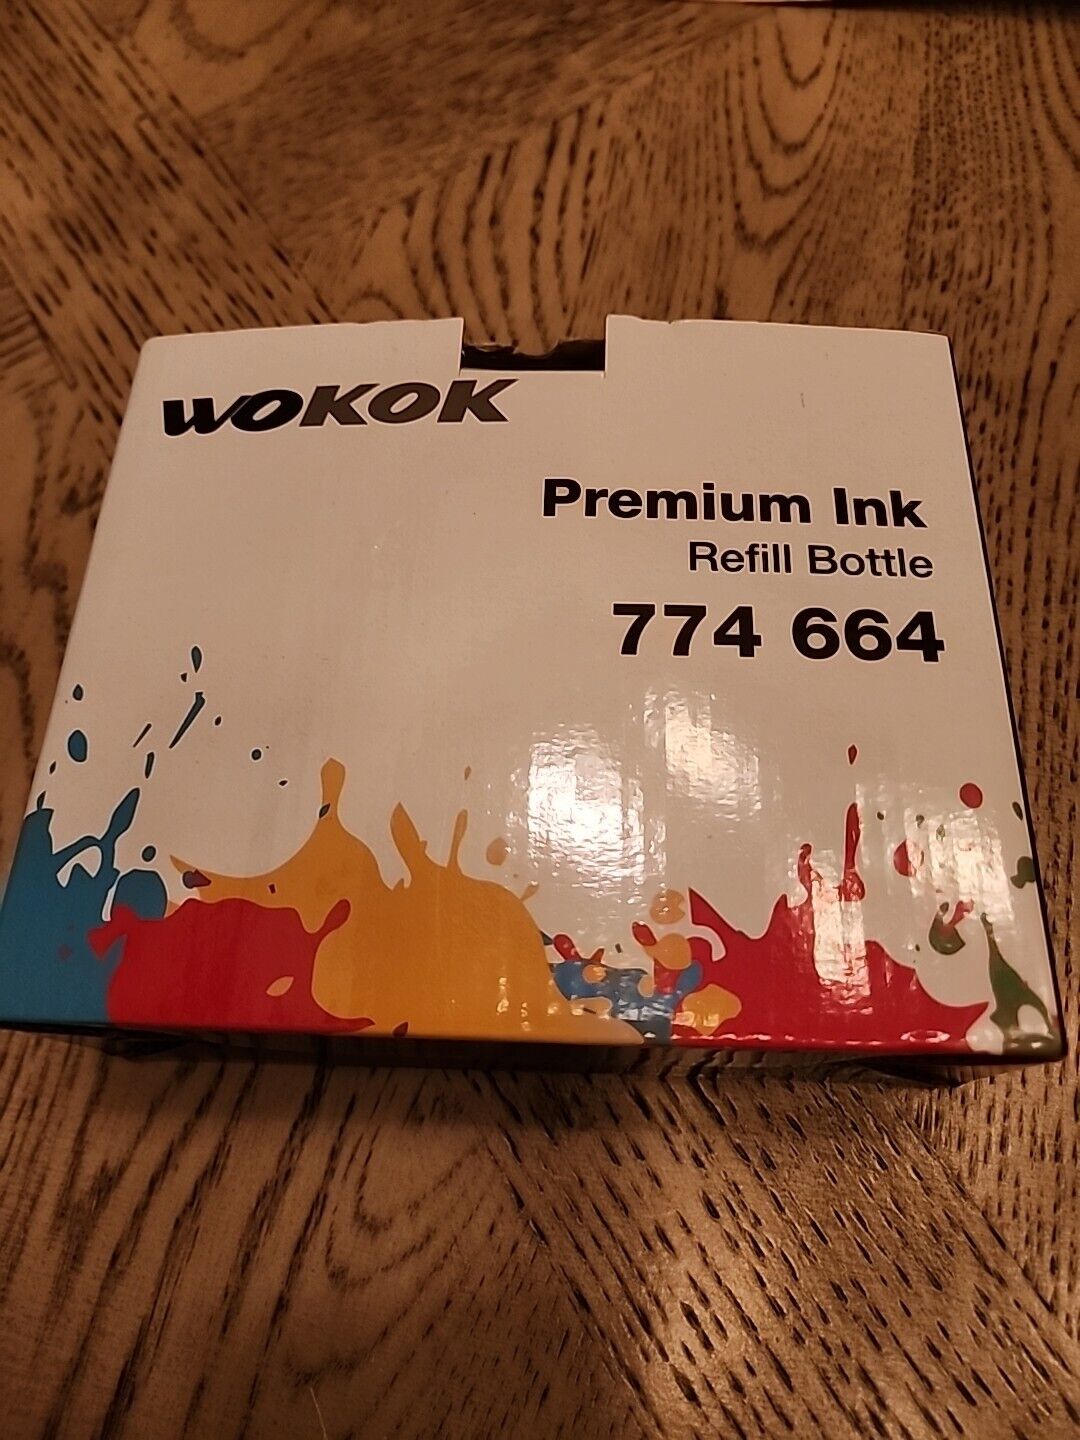 WOKOK PREMIUM INK REFILL BOTTLES 774 664 BLACK BLUE RED YELLOW New-Sealed